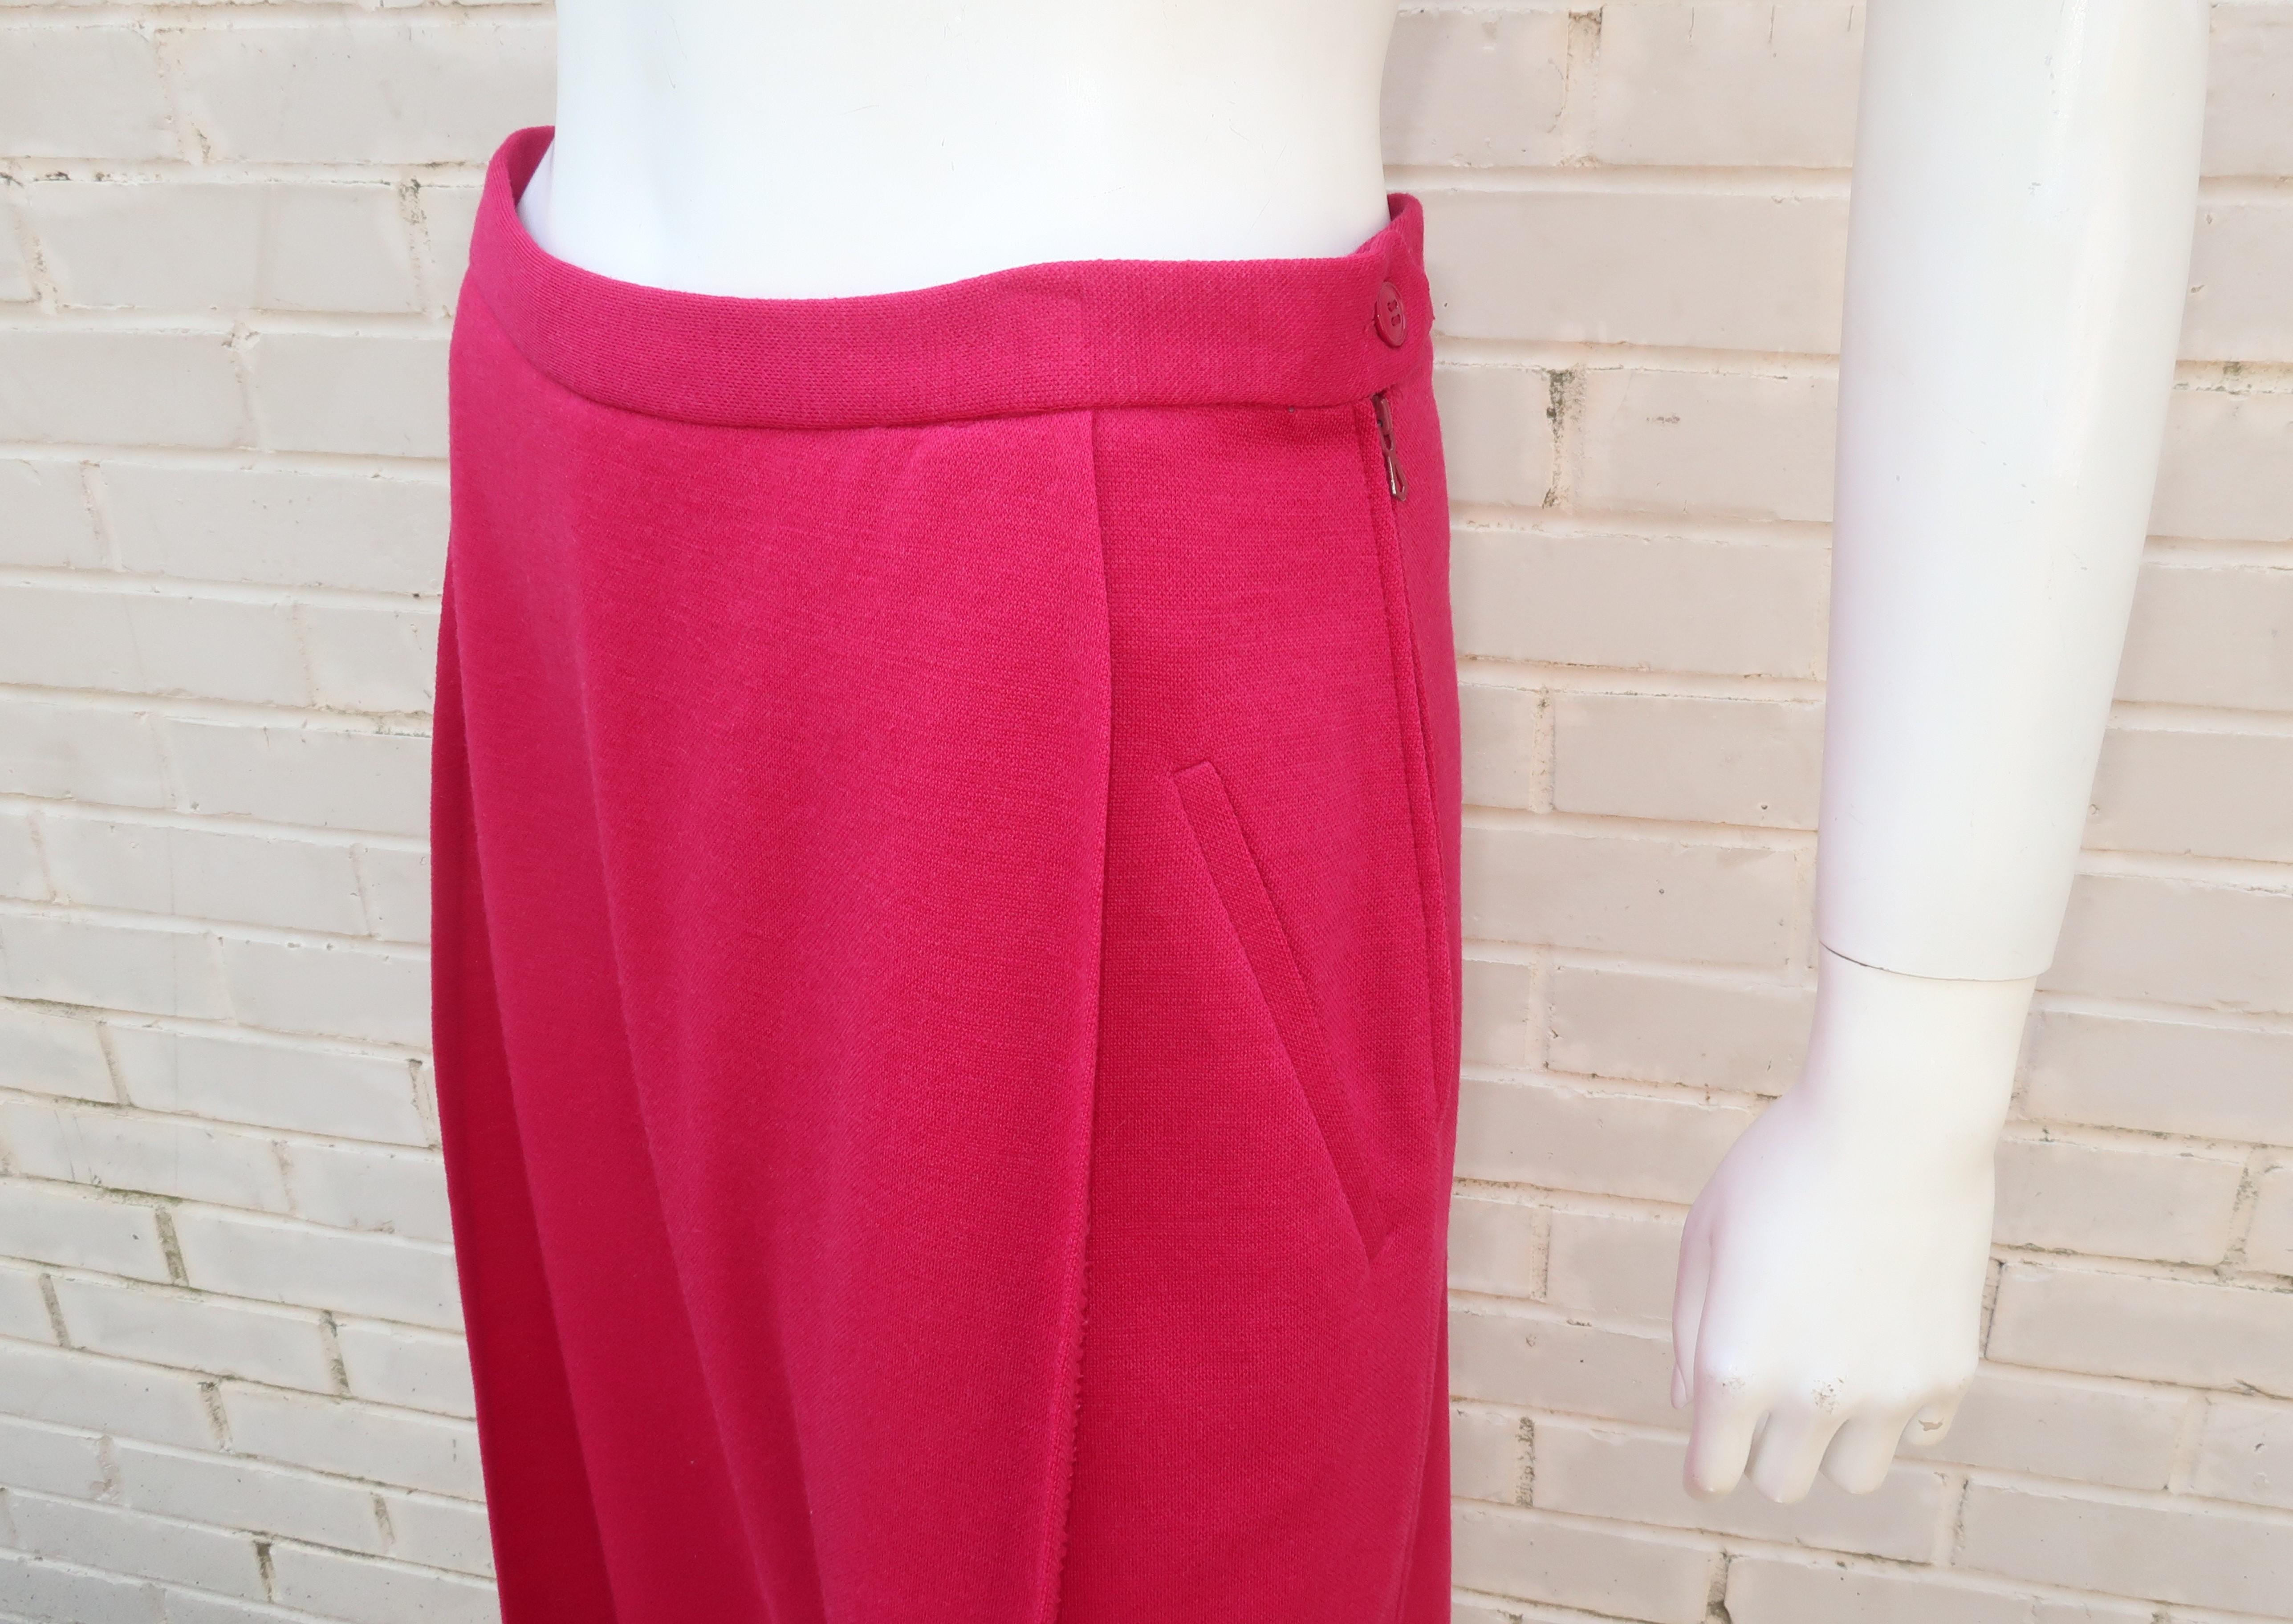 Women's Sonia Rykiel Hot Pink Culottes Skirt, 1980's